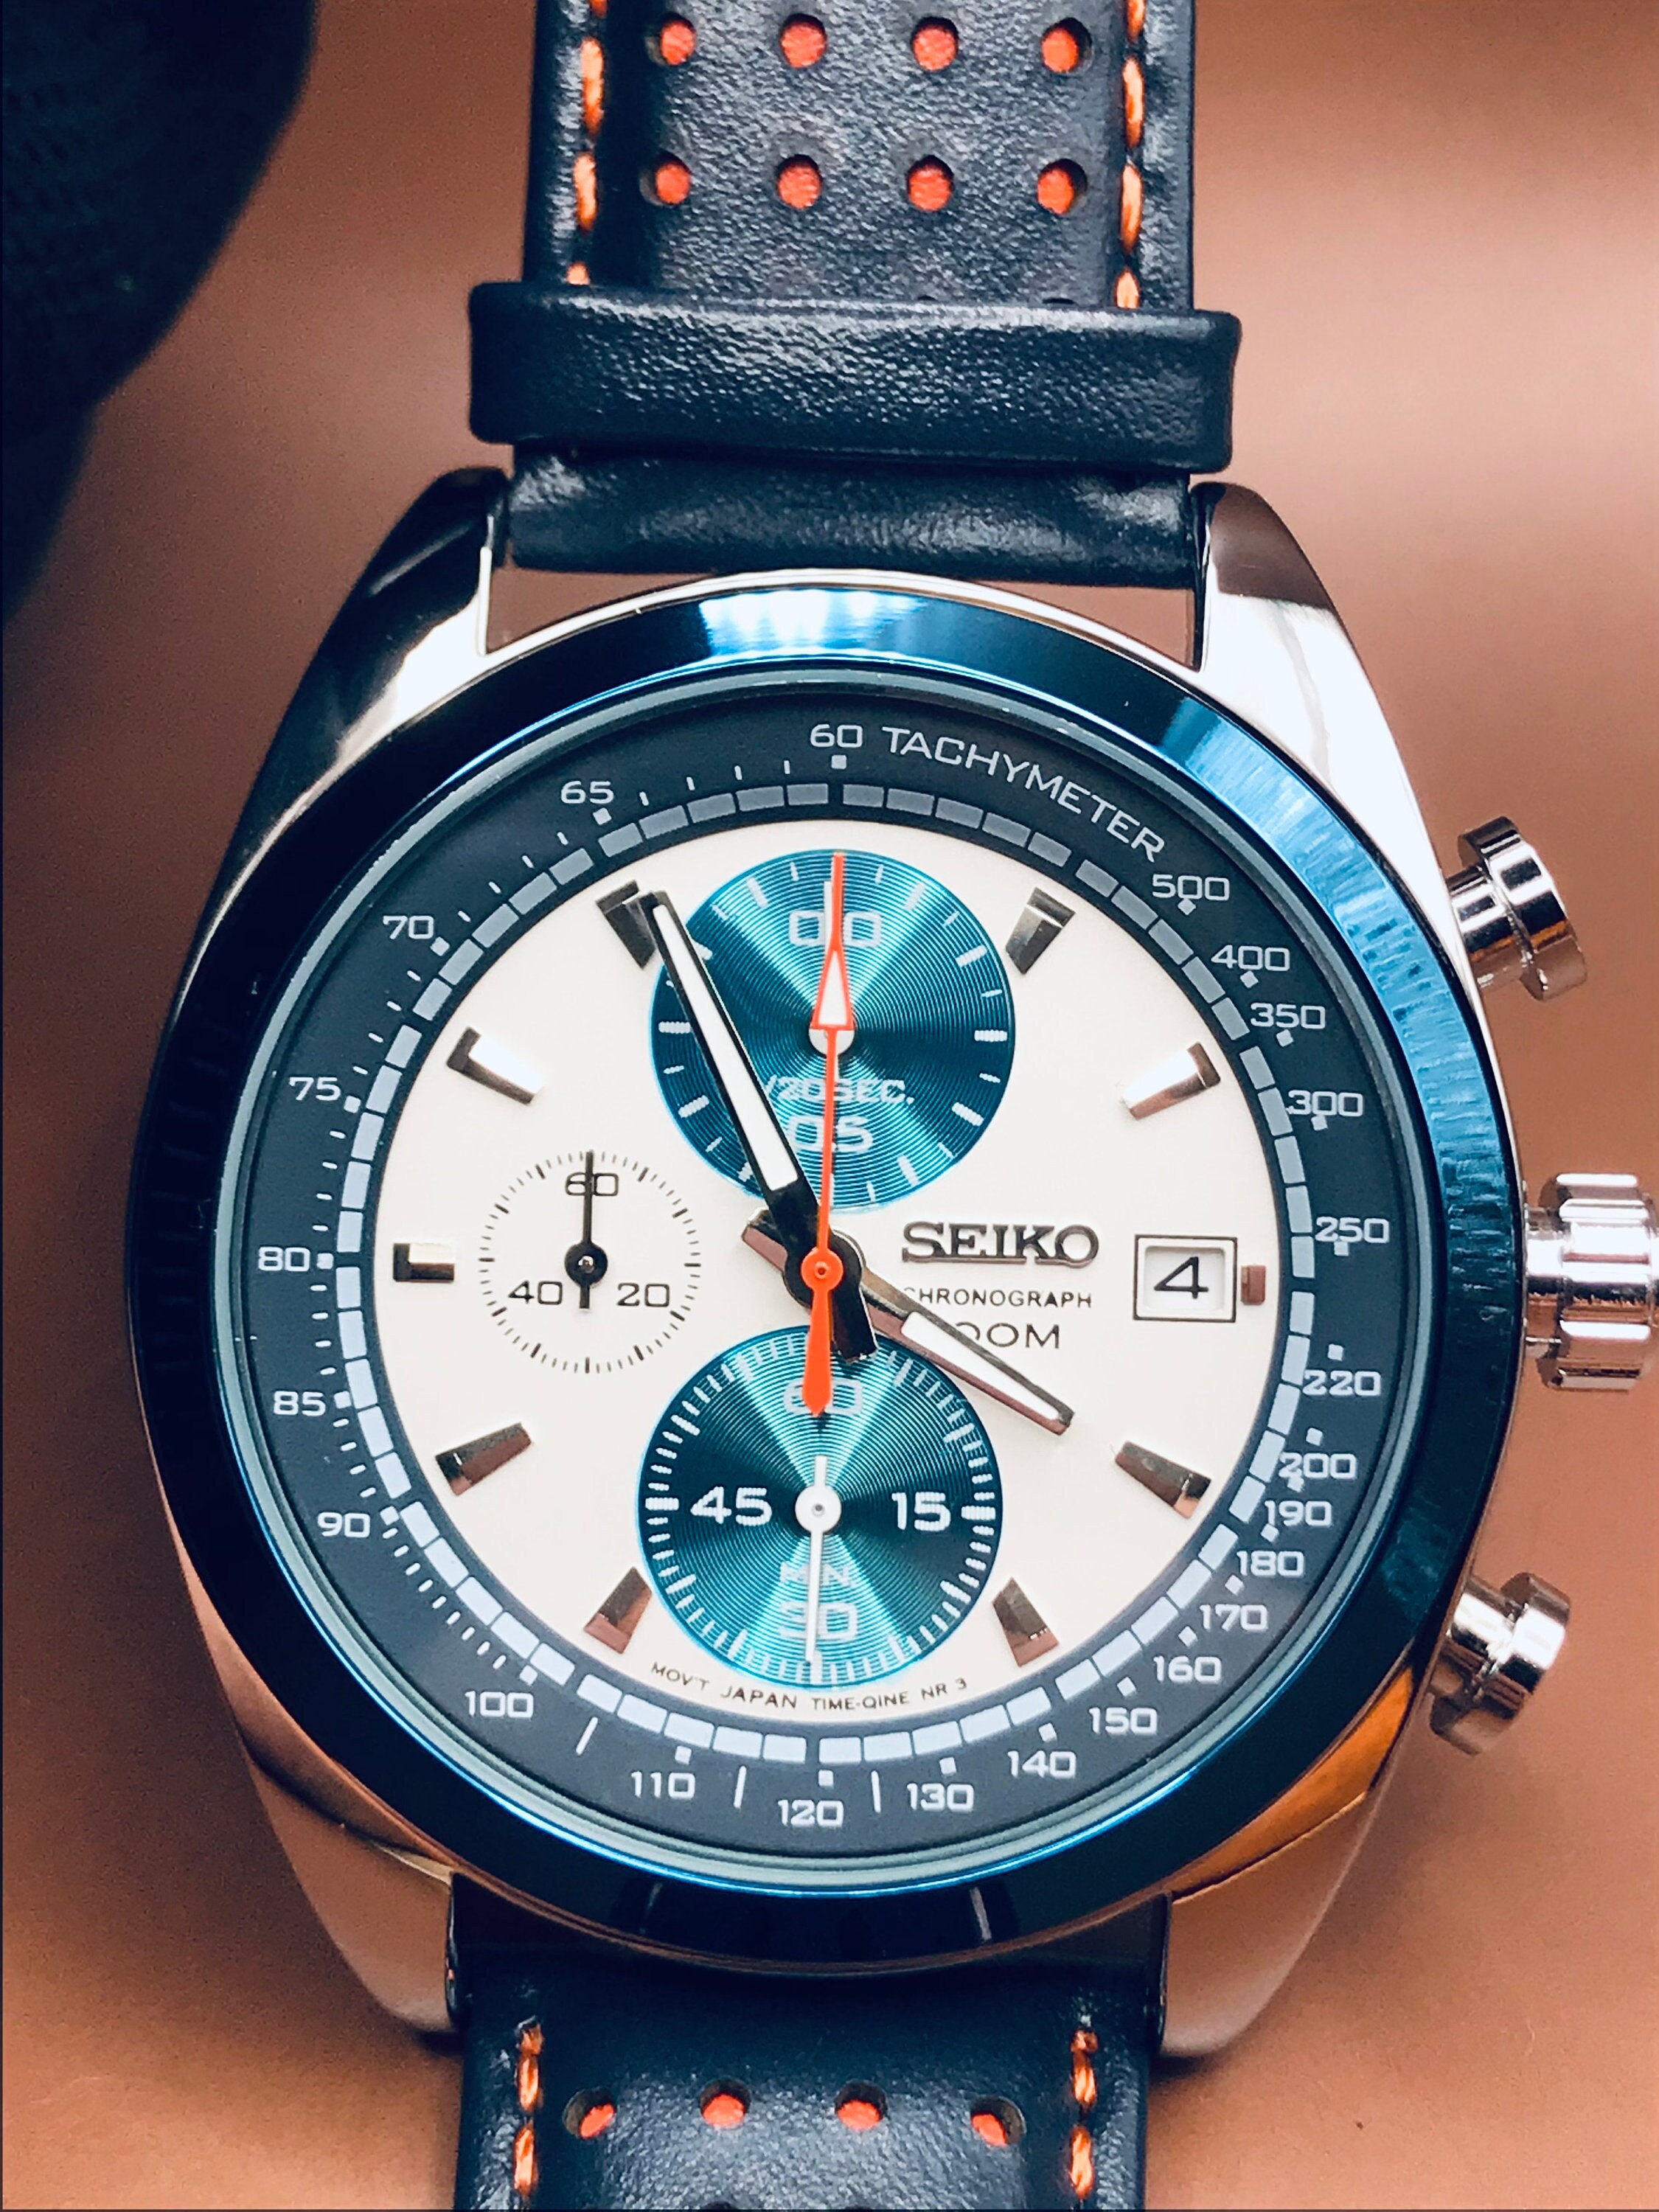 New 44mm Seiko Homage Panda Chronograph Wrist Watch Co-axial - Etsy